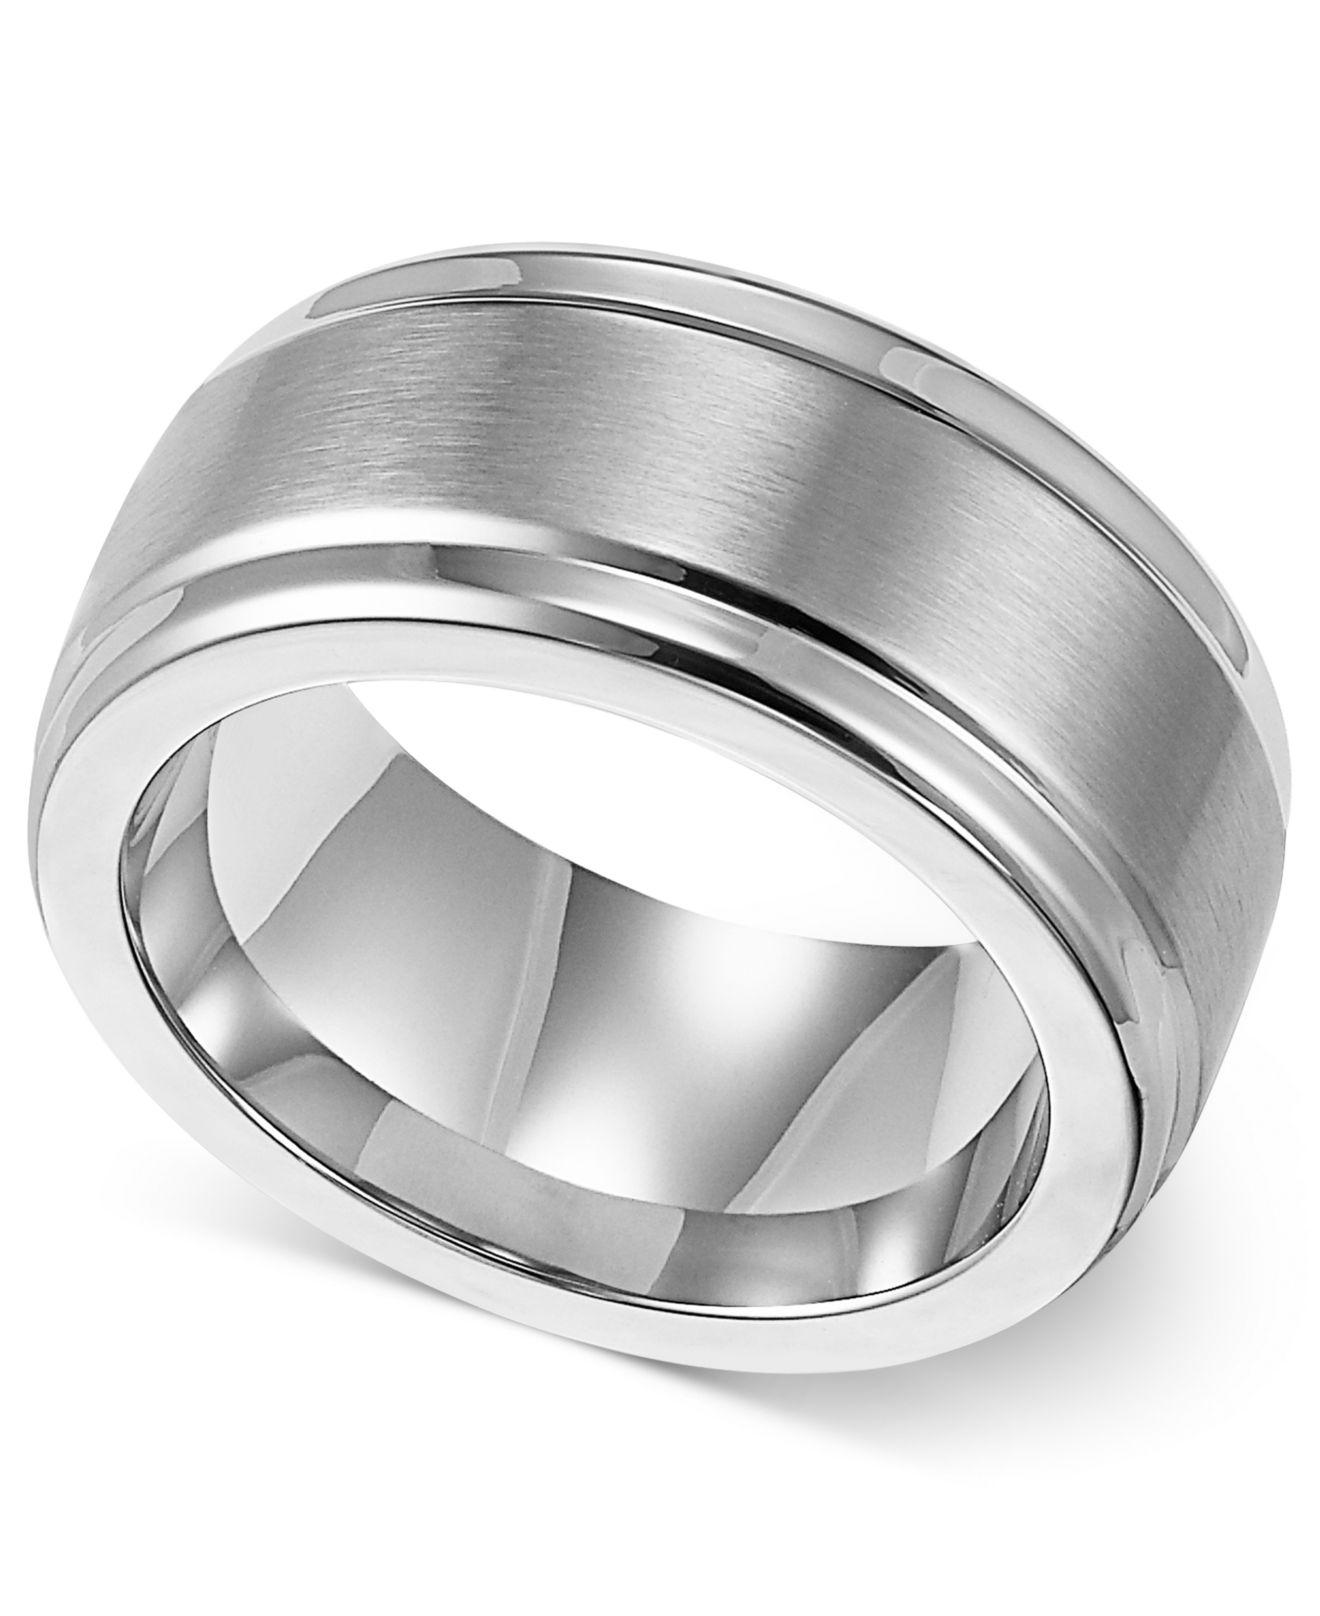 Lyst - Triton Men's Stainless Steel Ring, 9mm Wedding Band in Metallic ...